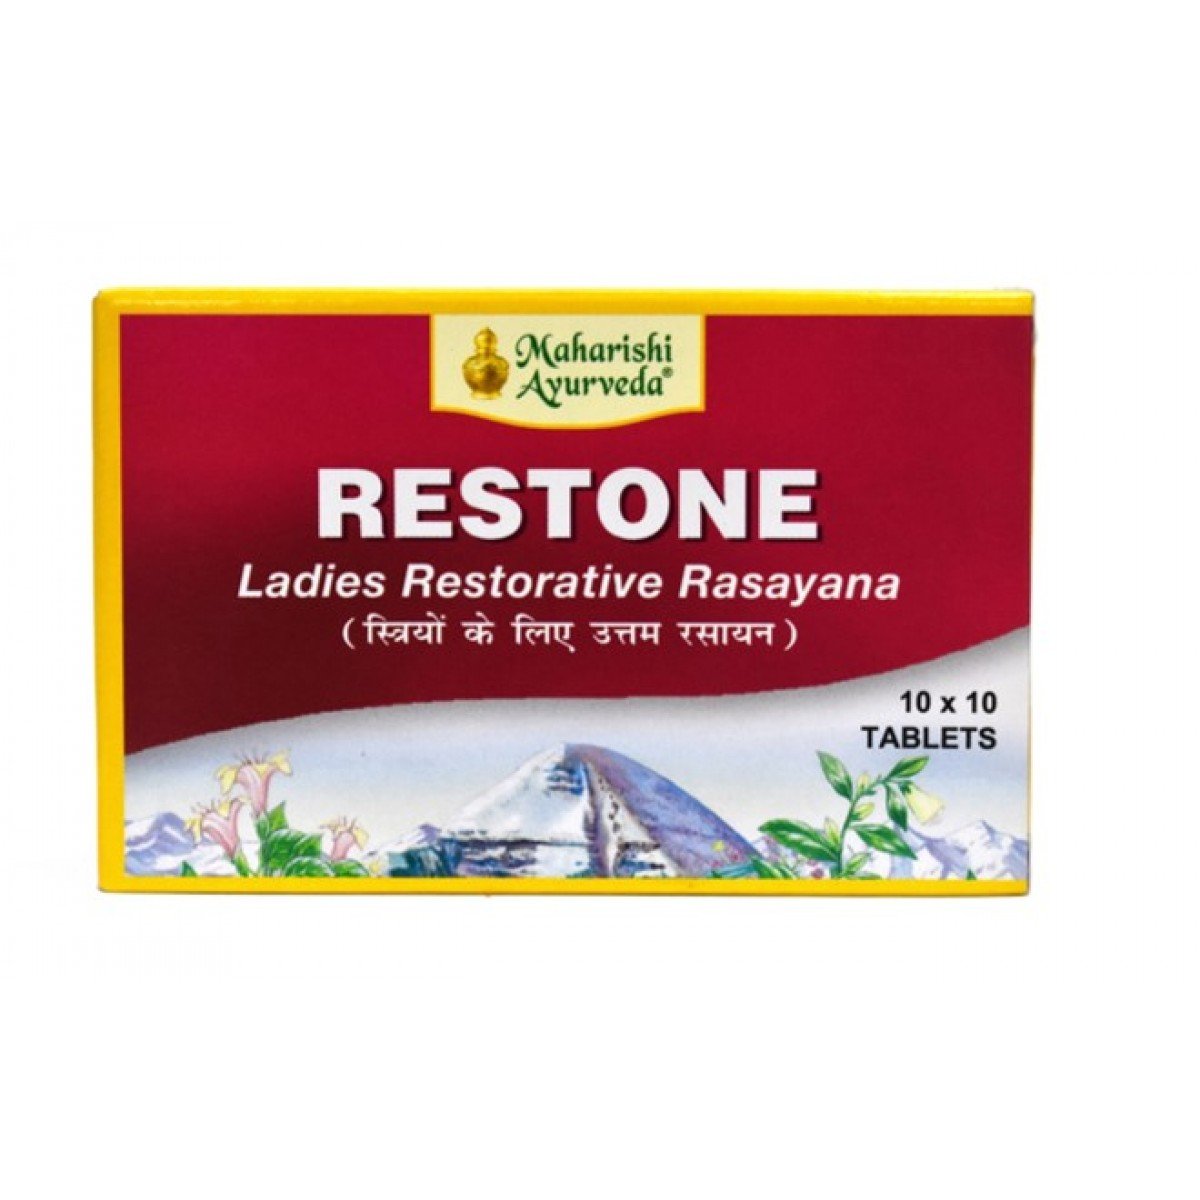 restone tablet uses